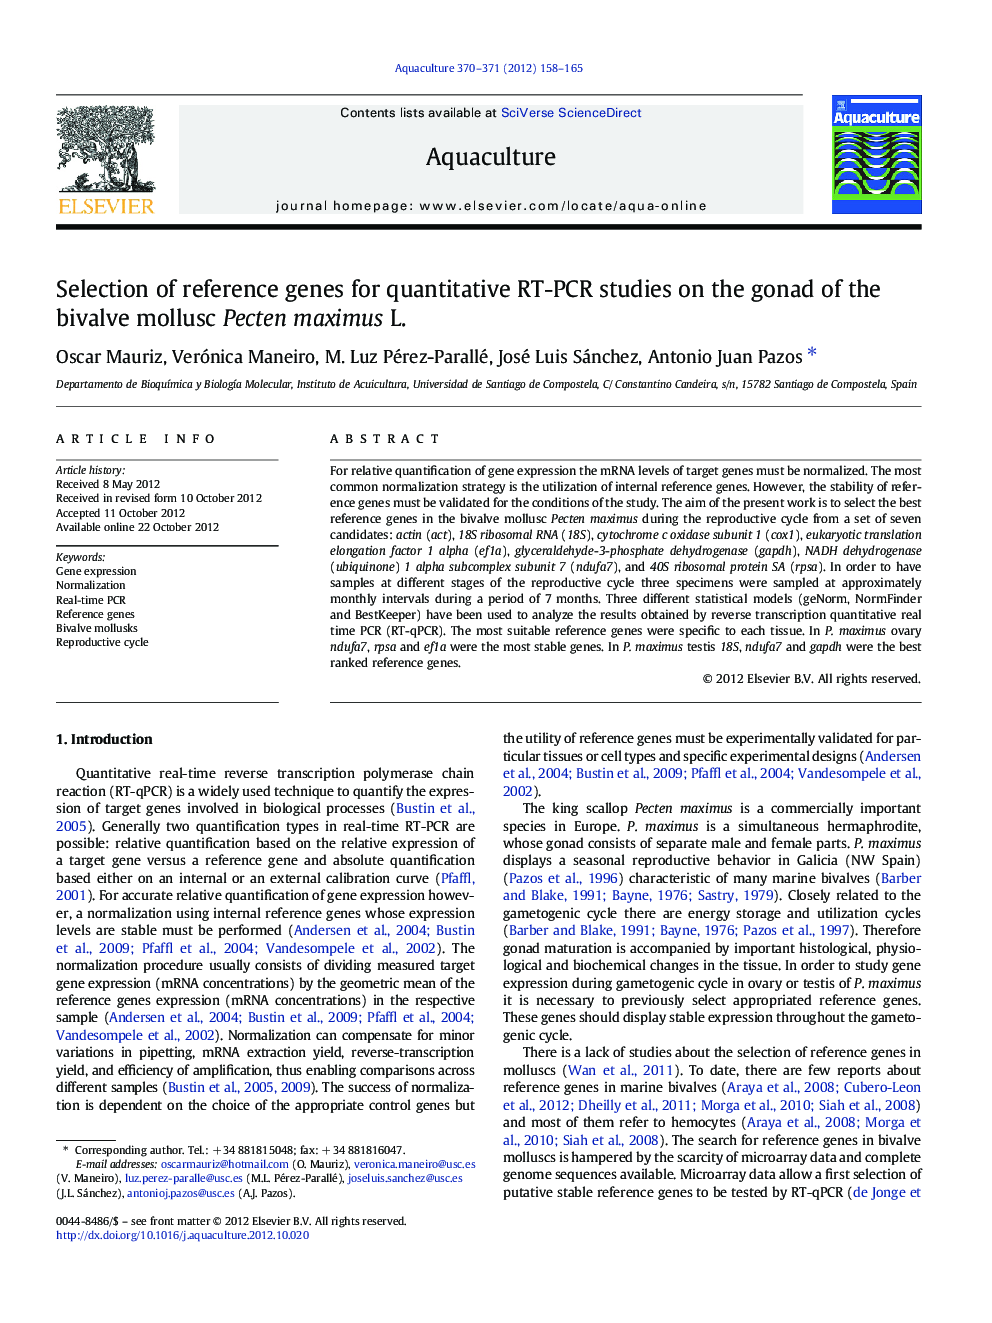 Selection of reference genes for quantitative RT-PCR studies on the gonad of the bivalve mollusc Pecten maximus L.